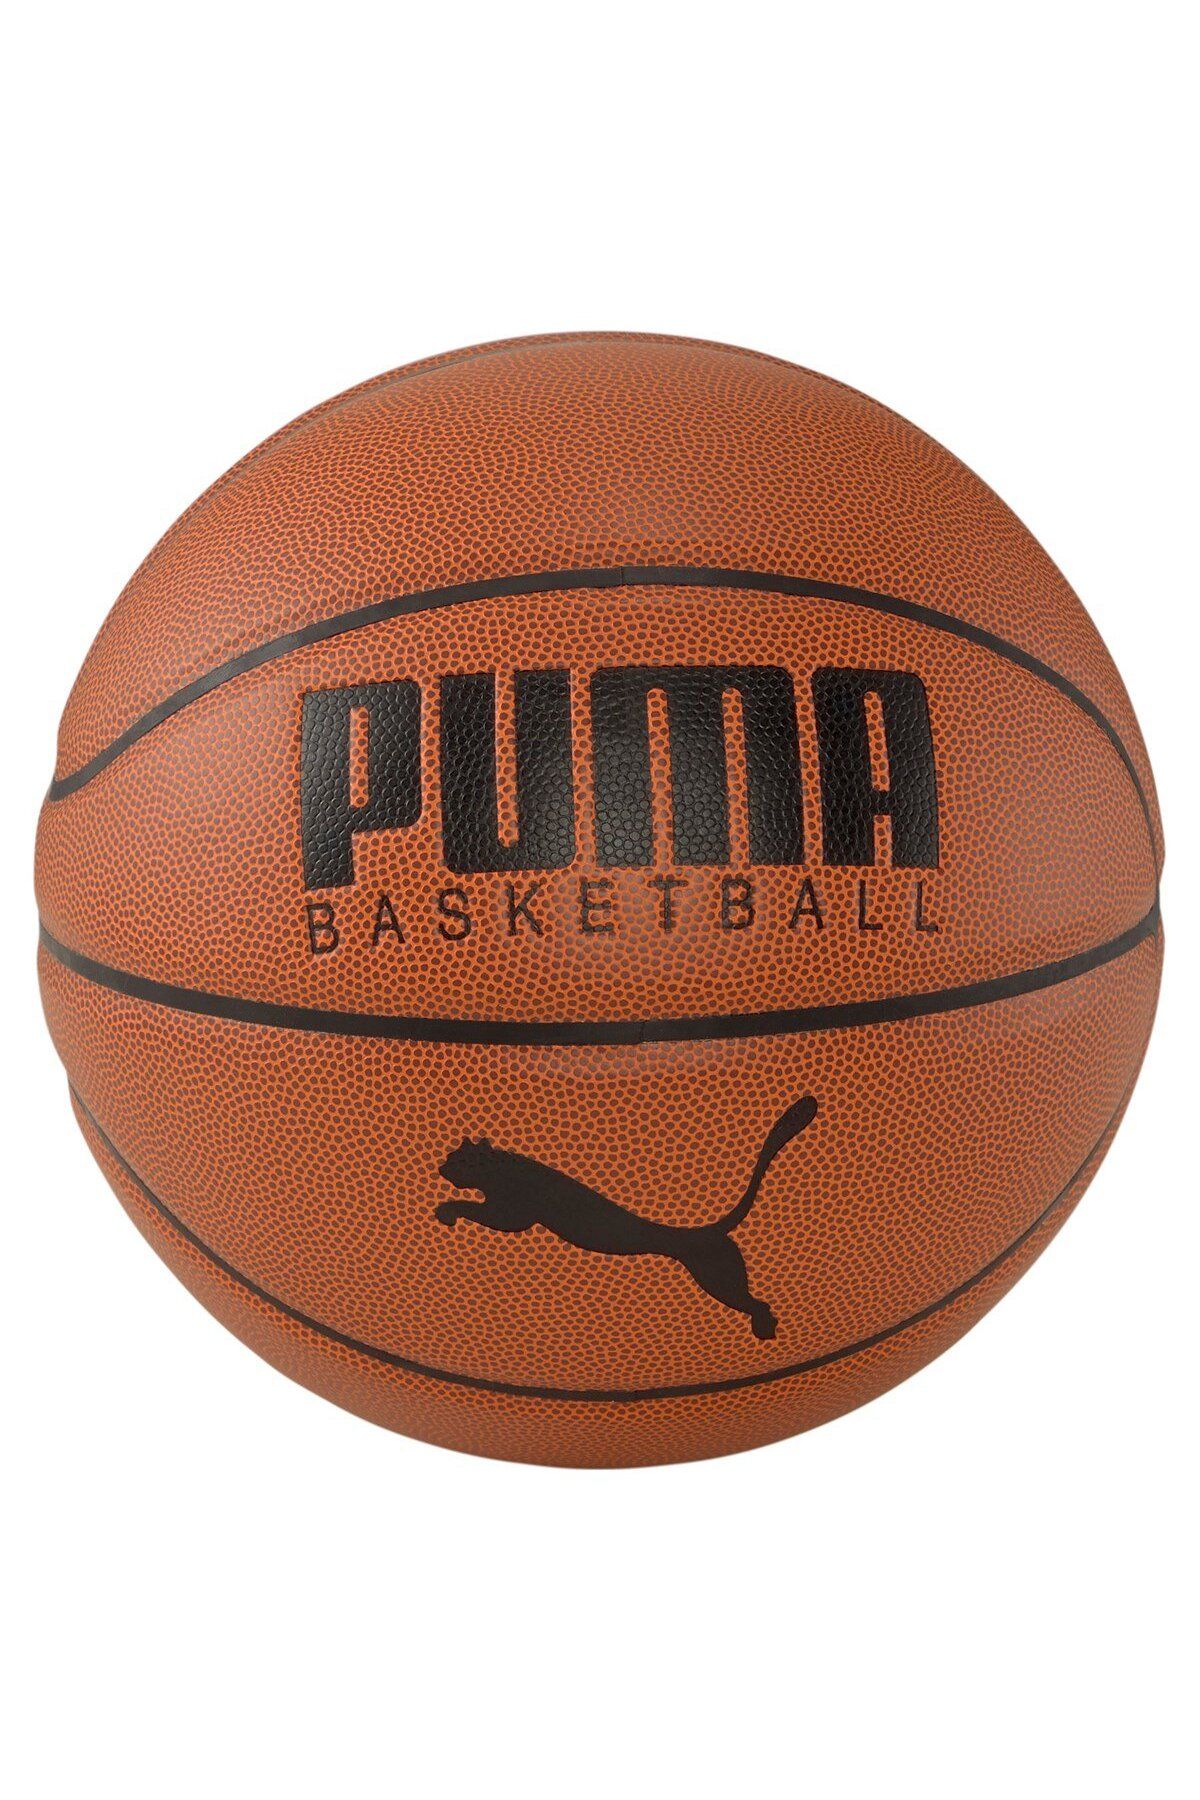 Puma Basketball Top Leather